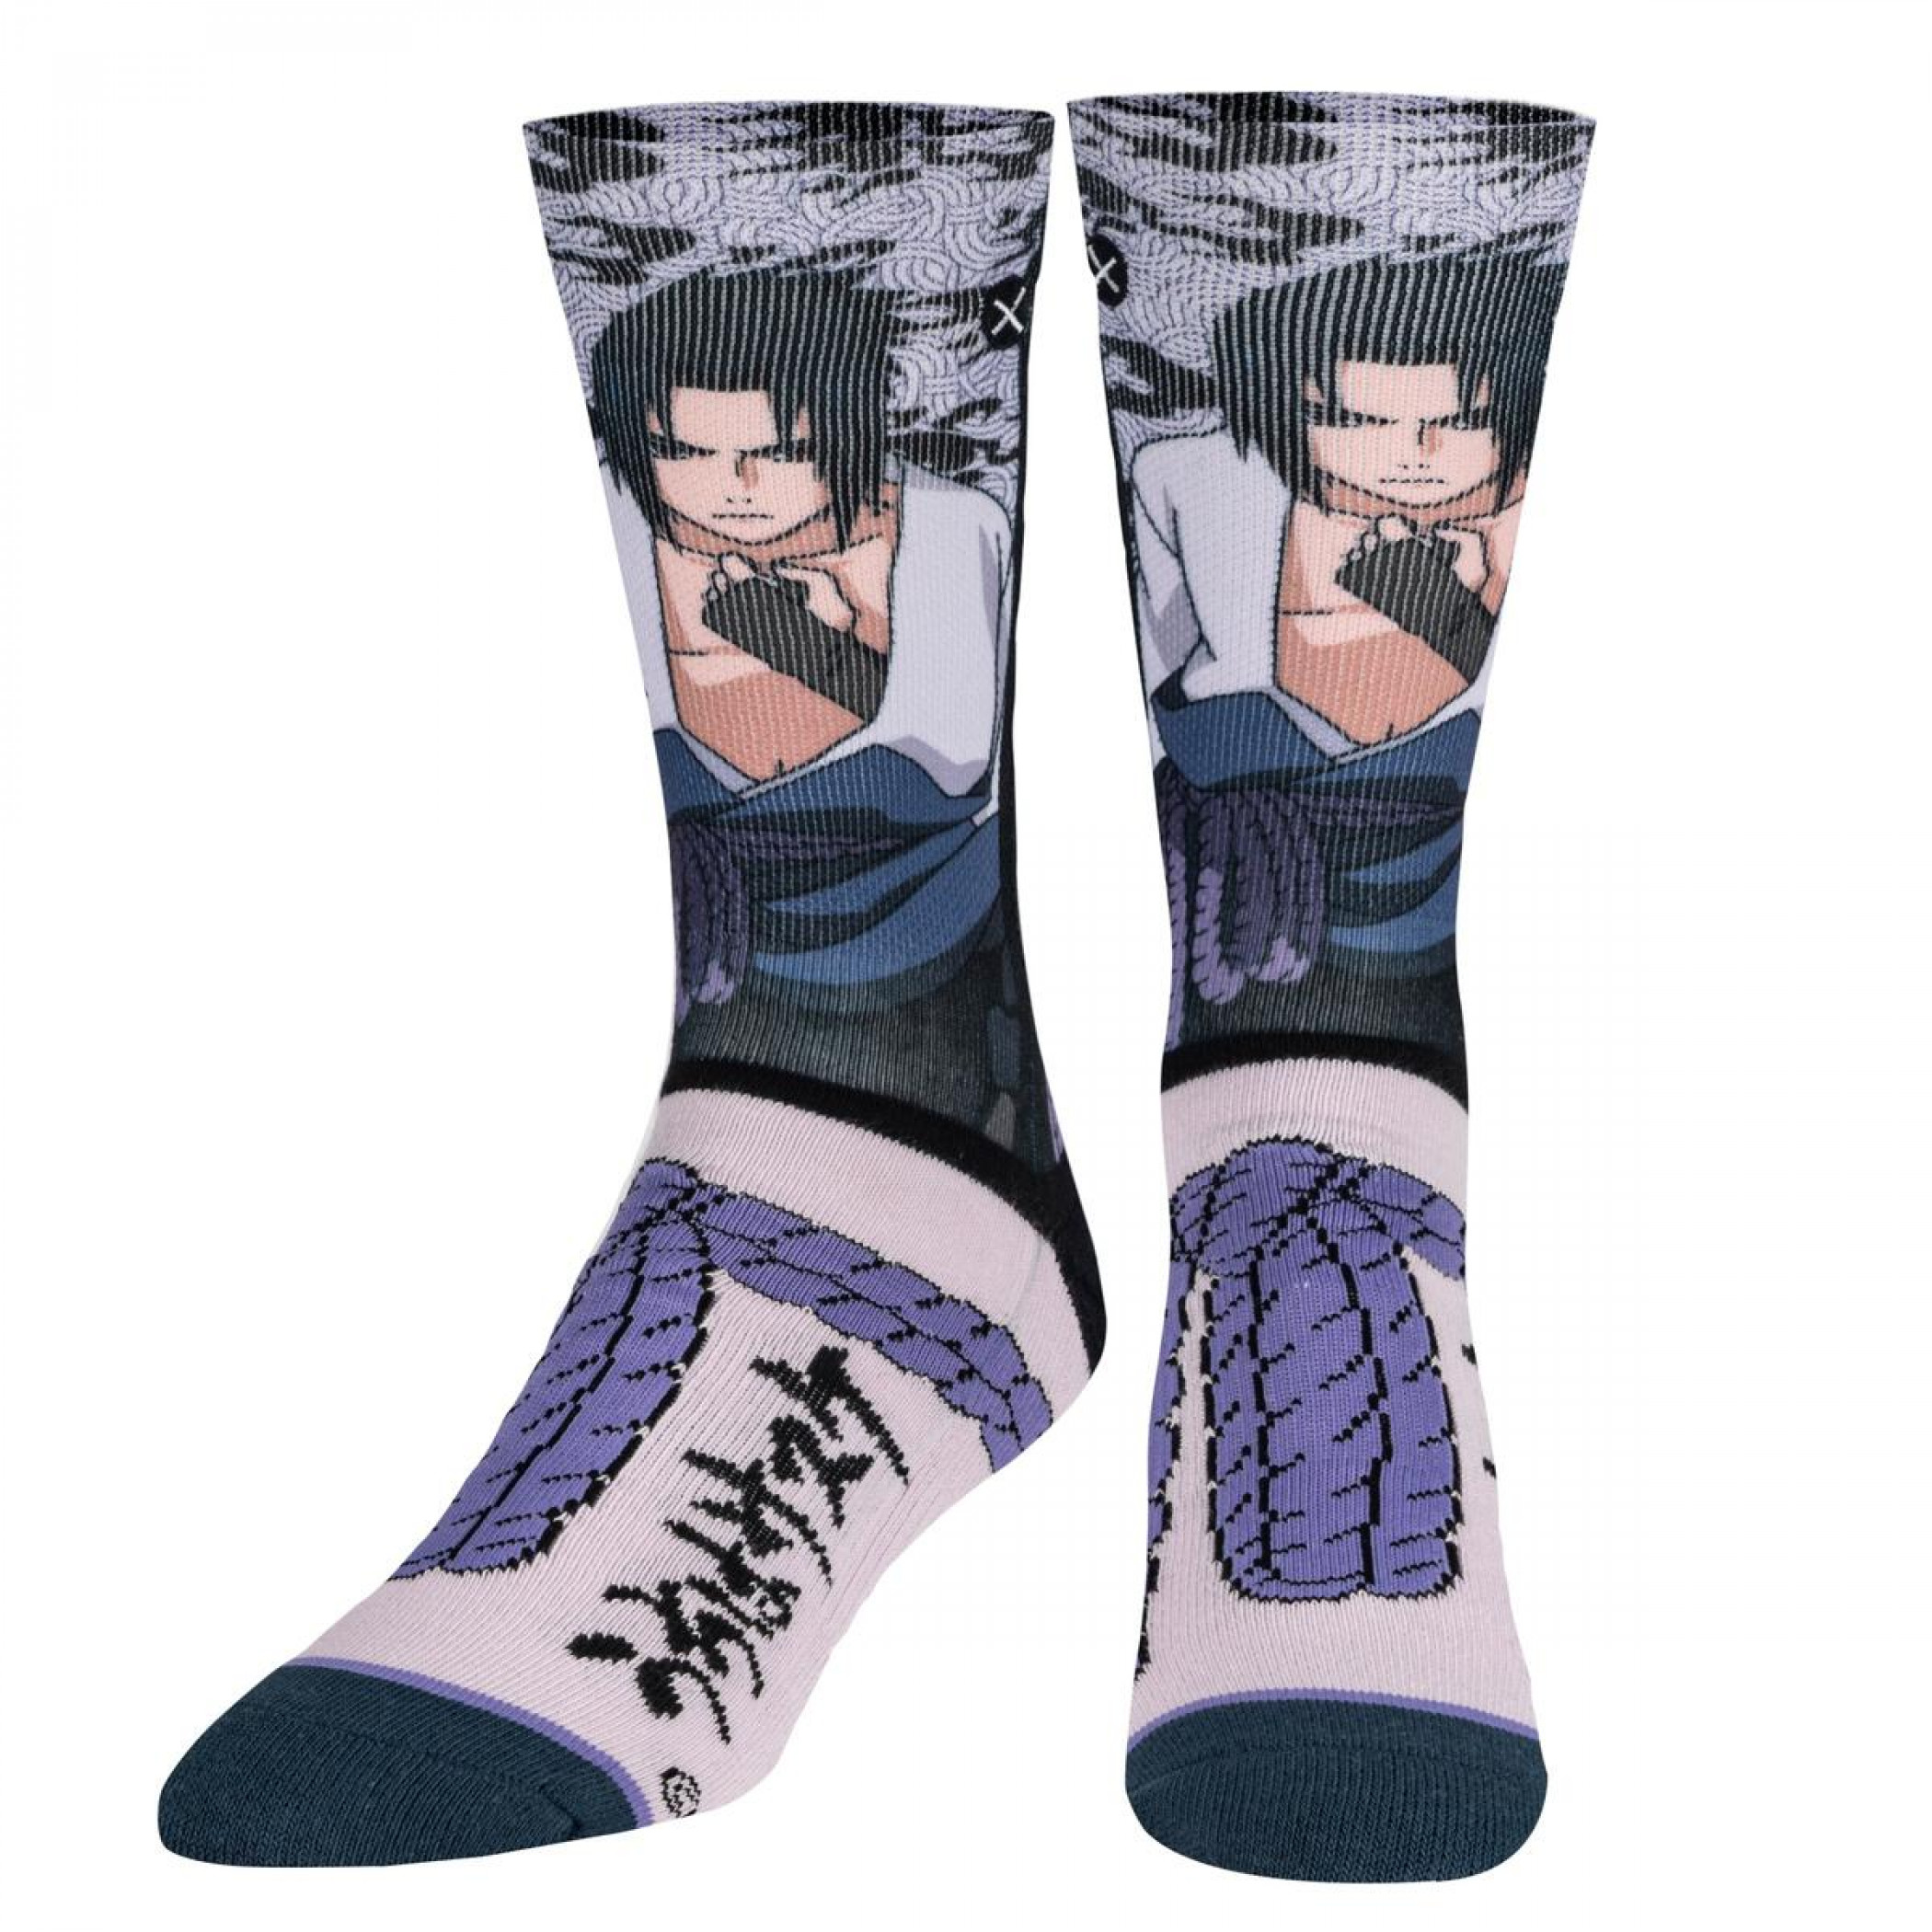 Naruto Shippuden Uchiha Sasuke Sublimated Crew Socks